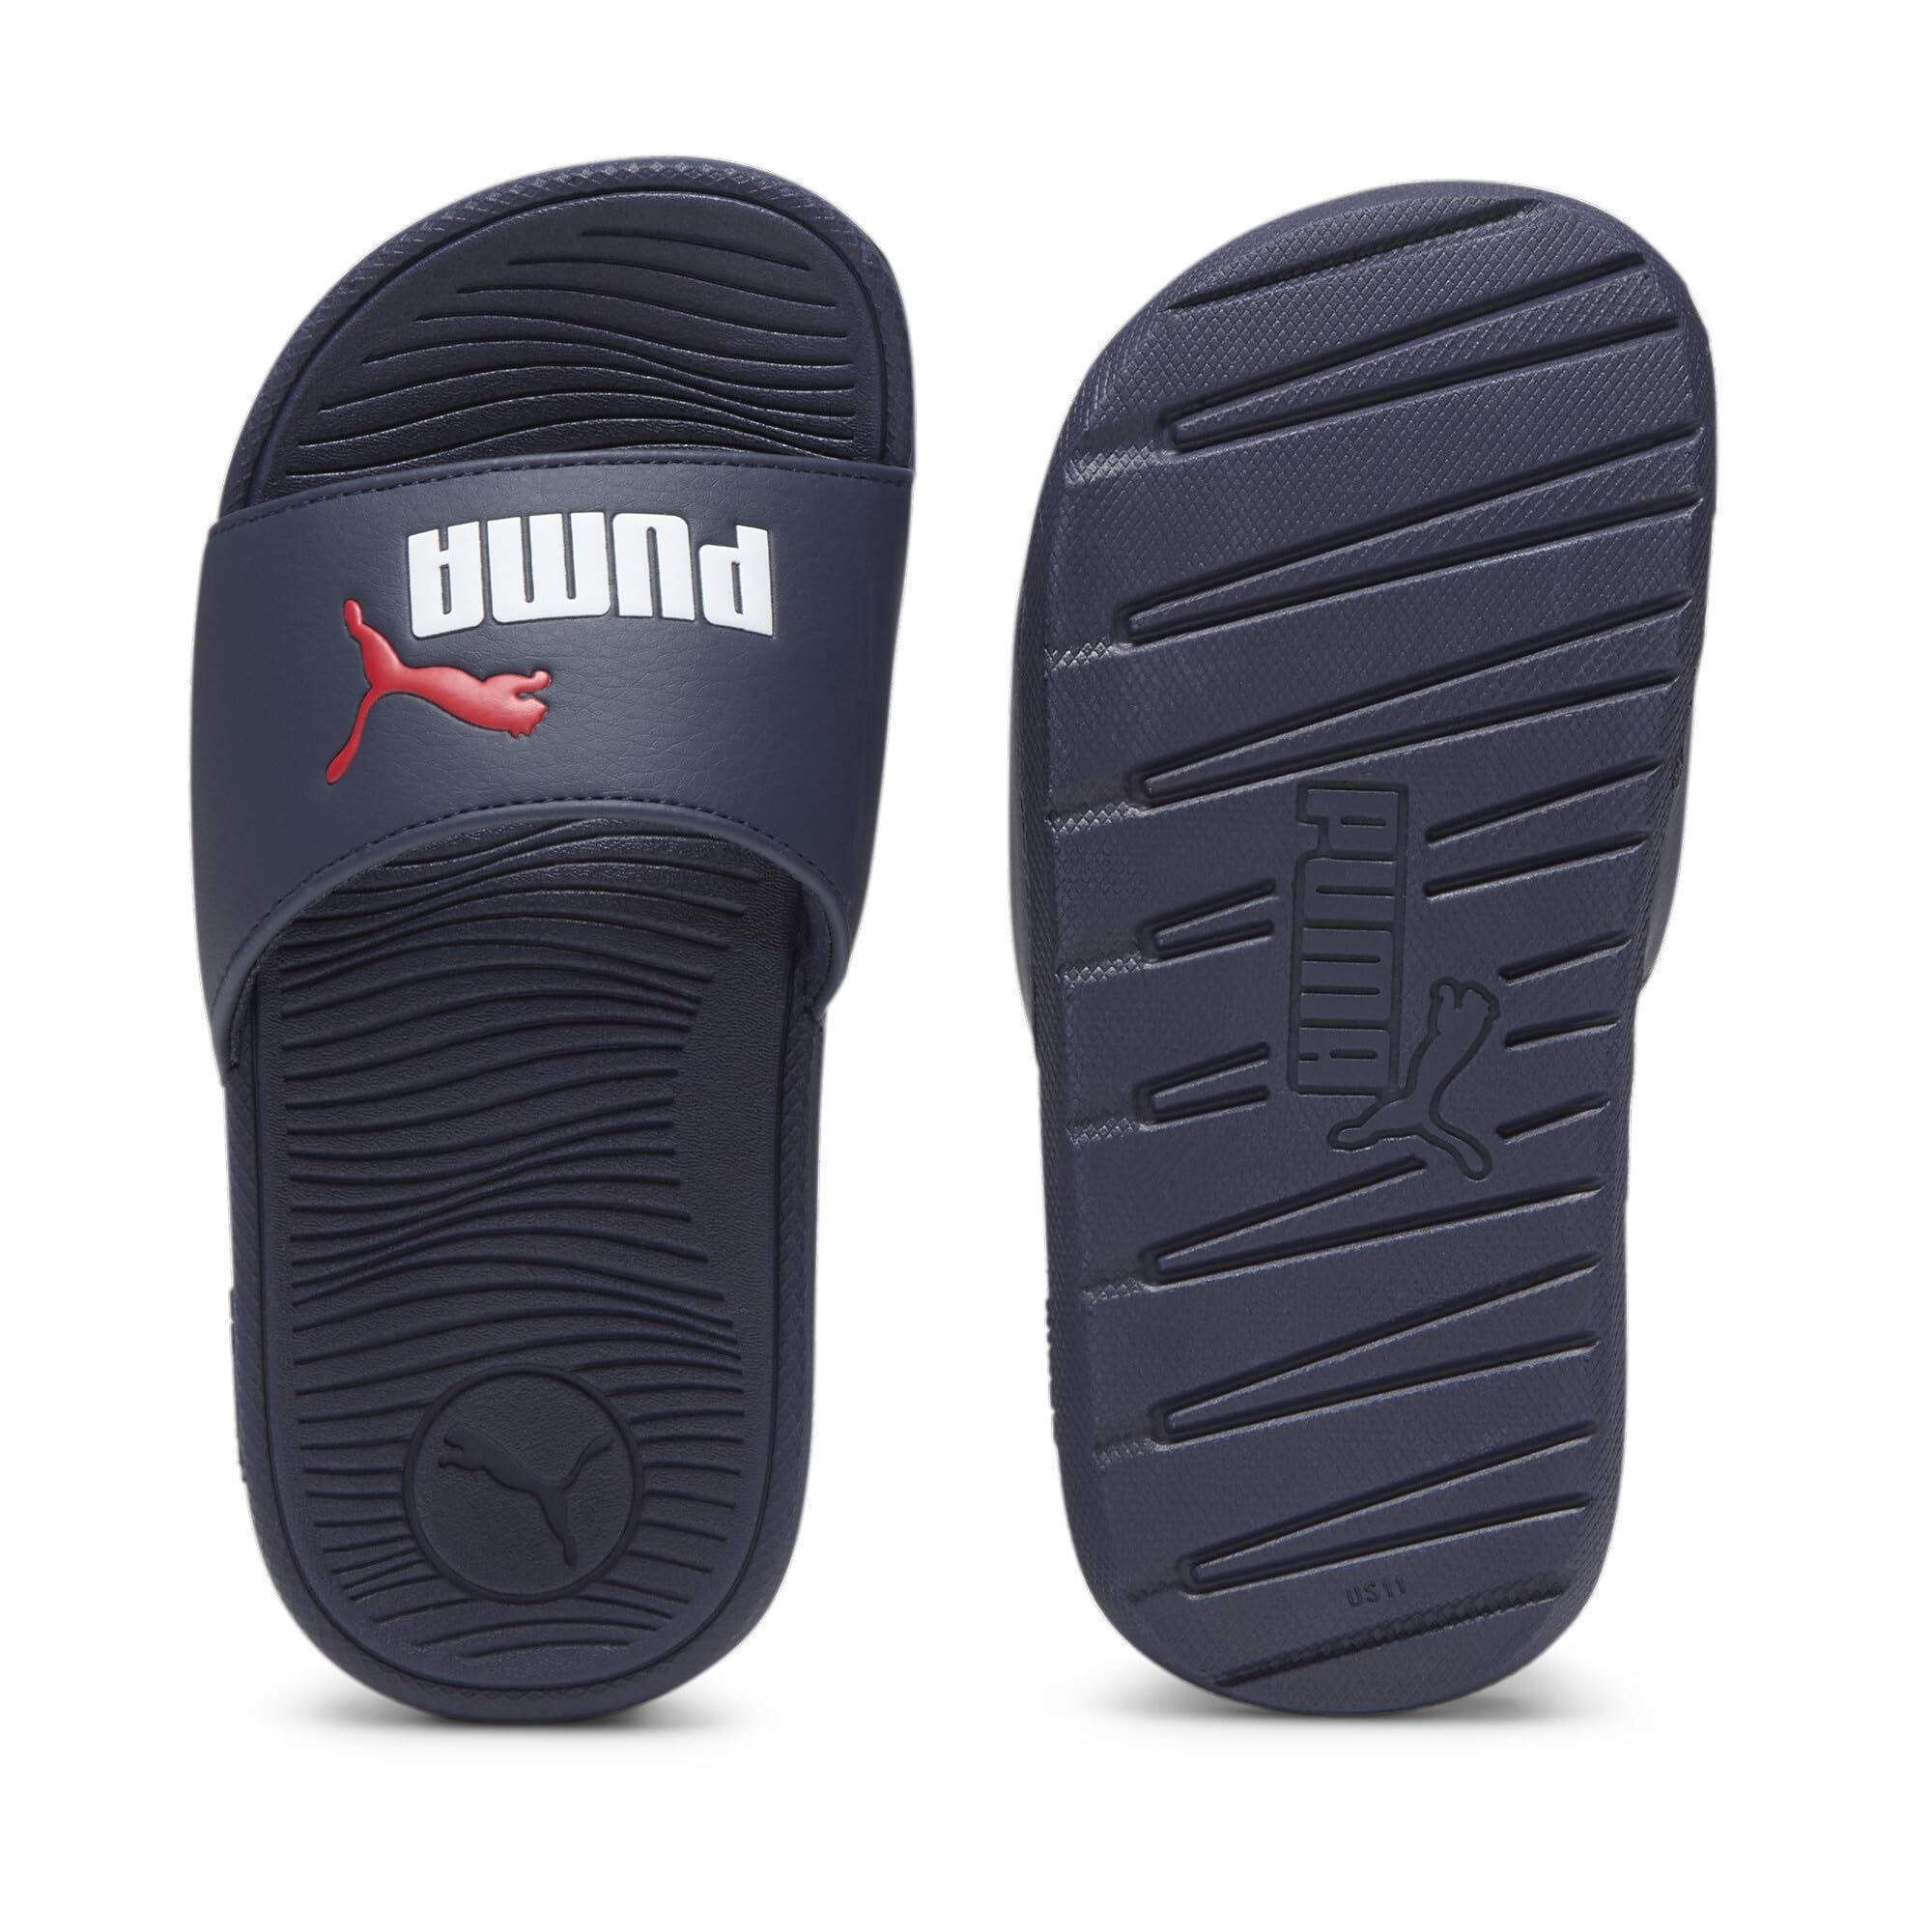 PUMA Unisex-Child Cool Cat 2.0 Sport Sandal